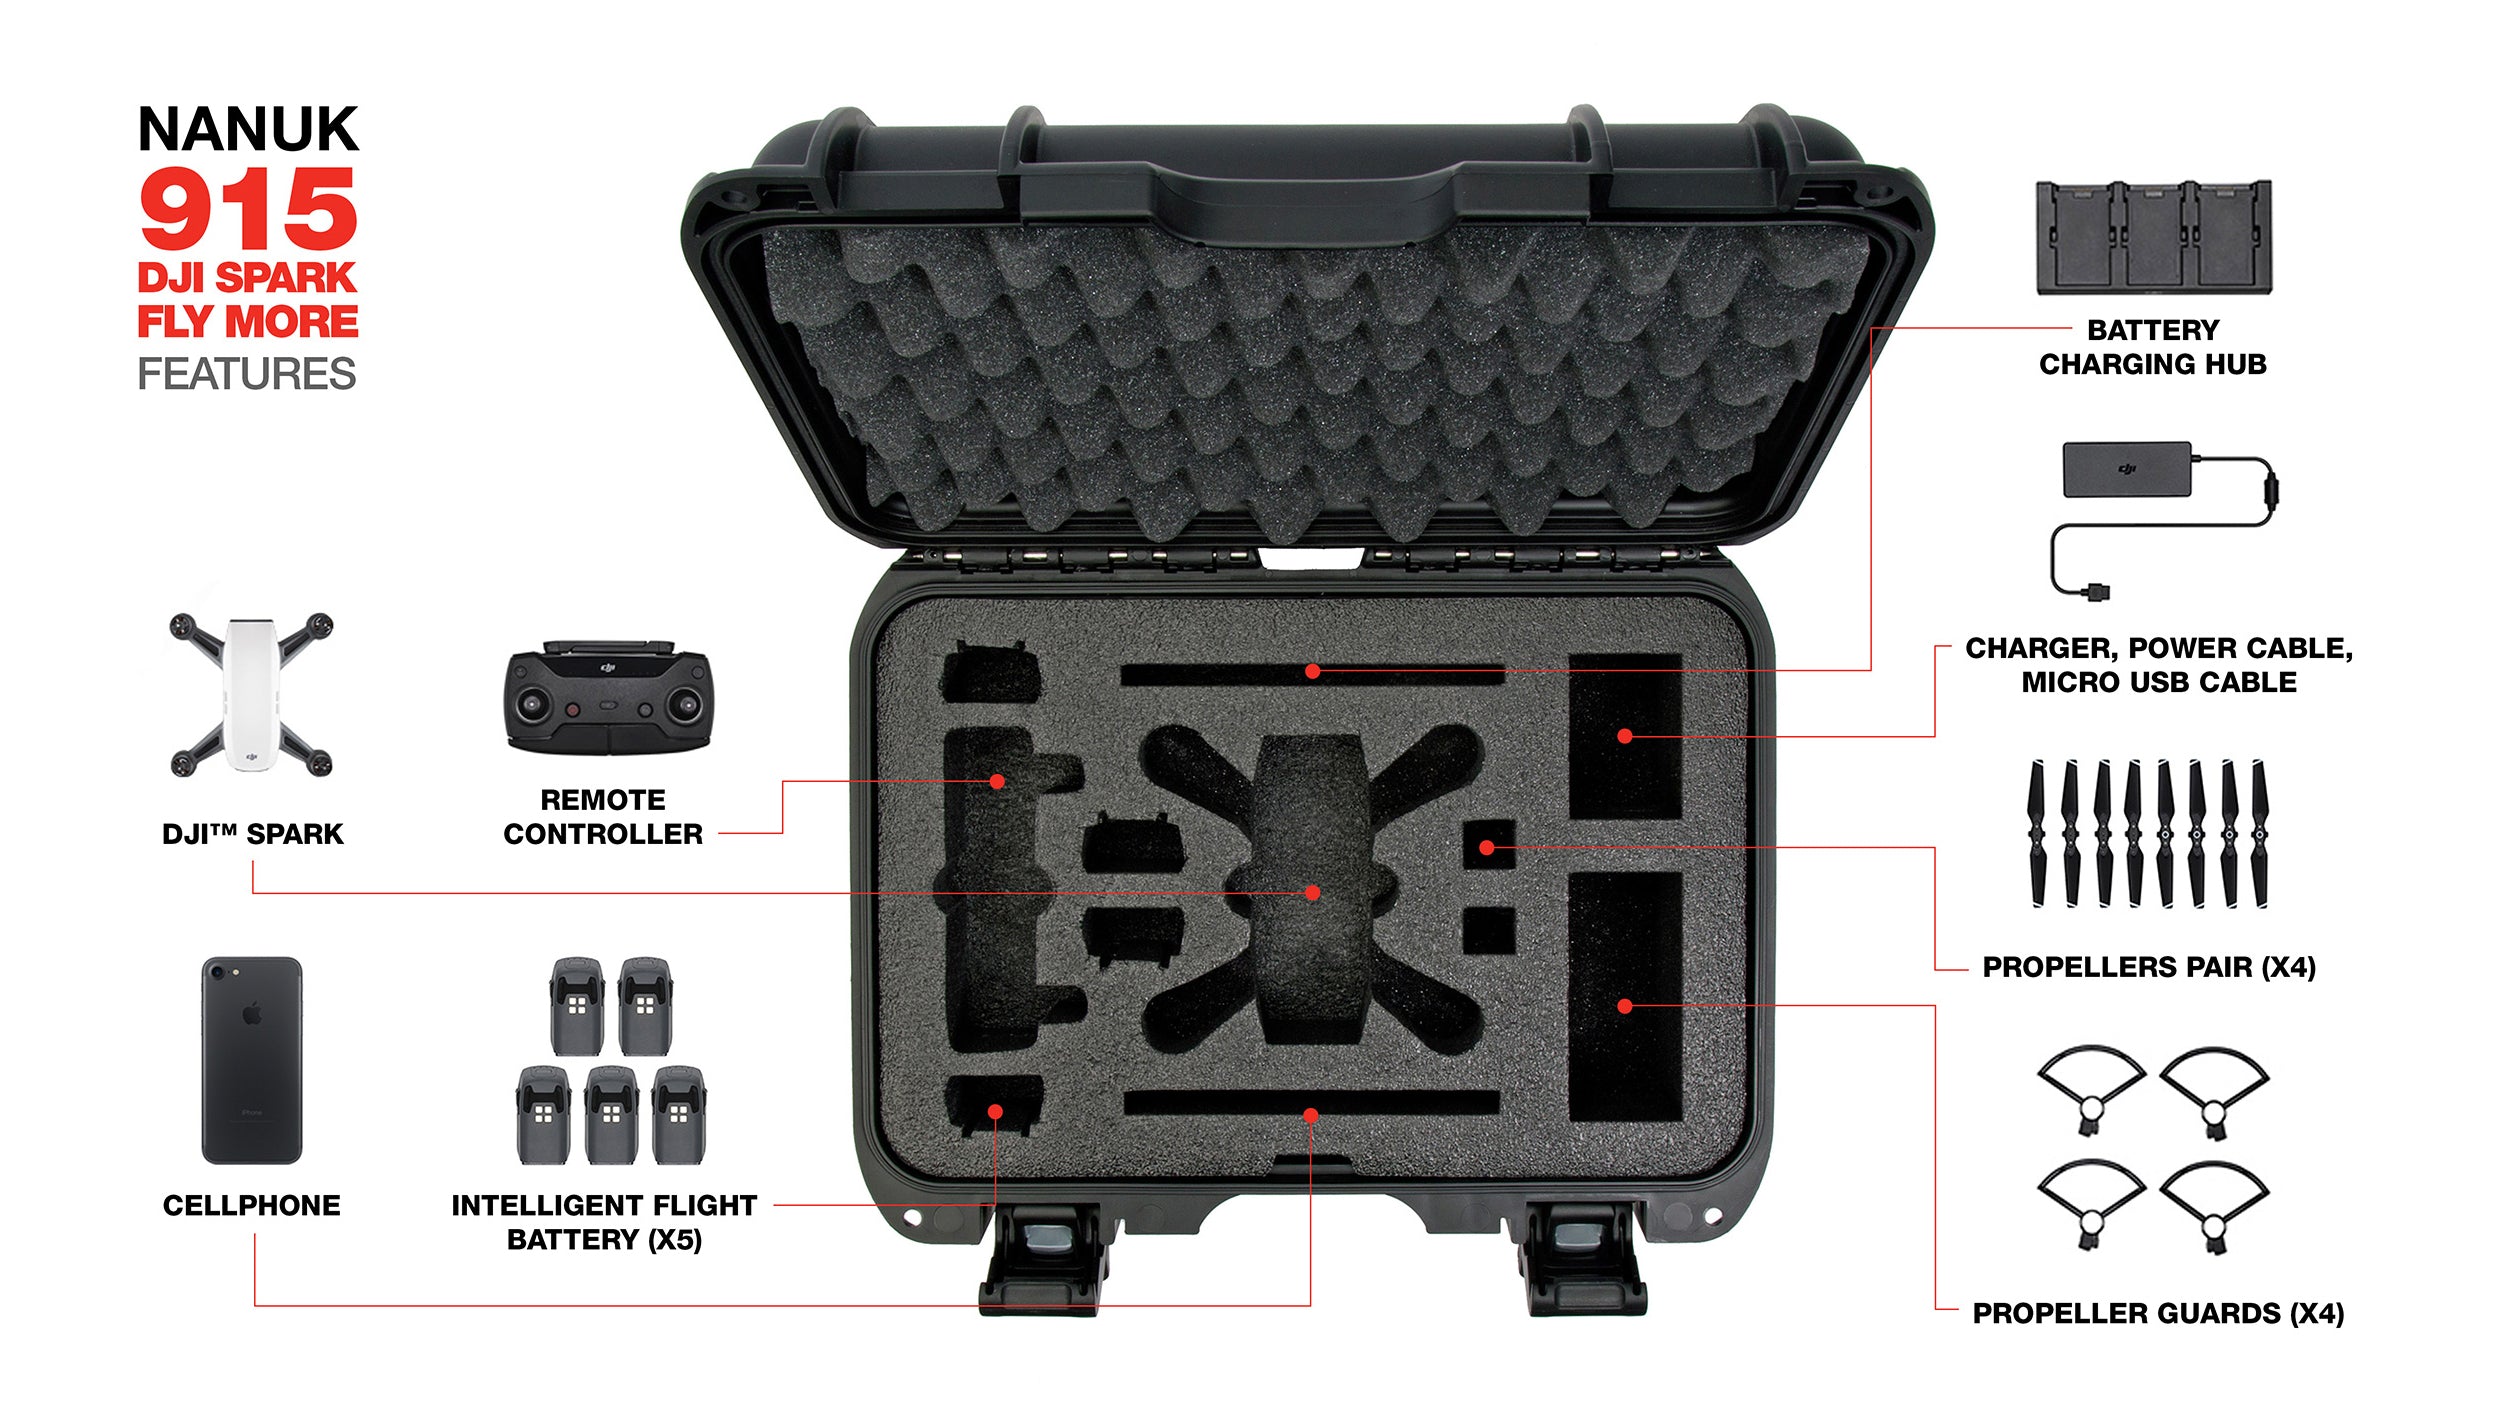 Nanuk 915 Hard Case with Foam Insert for DJI Spark Flymore Camera - Black